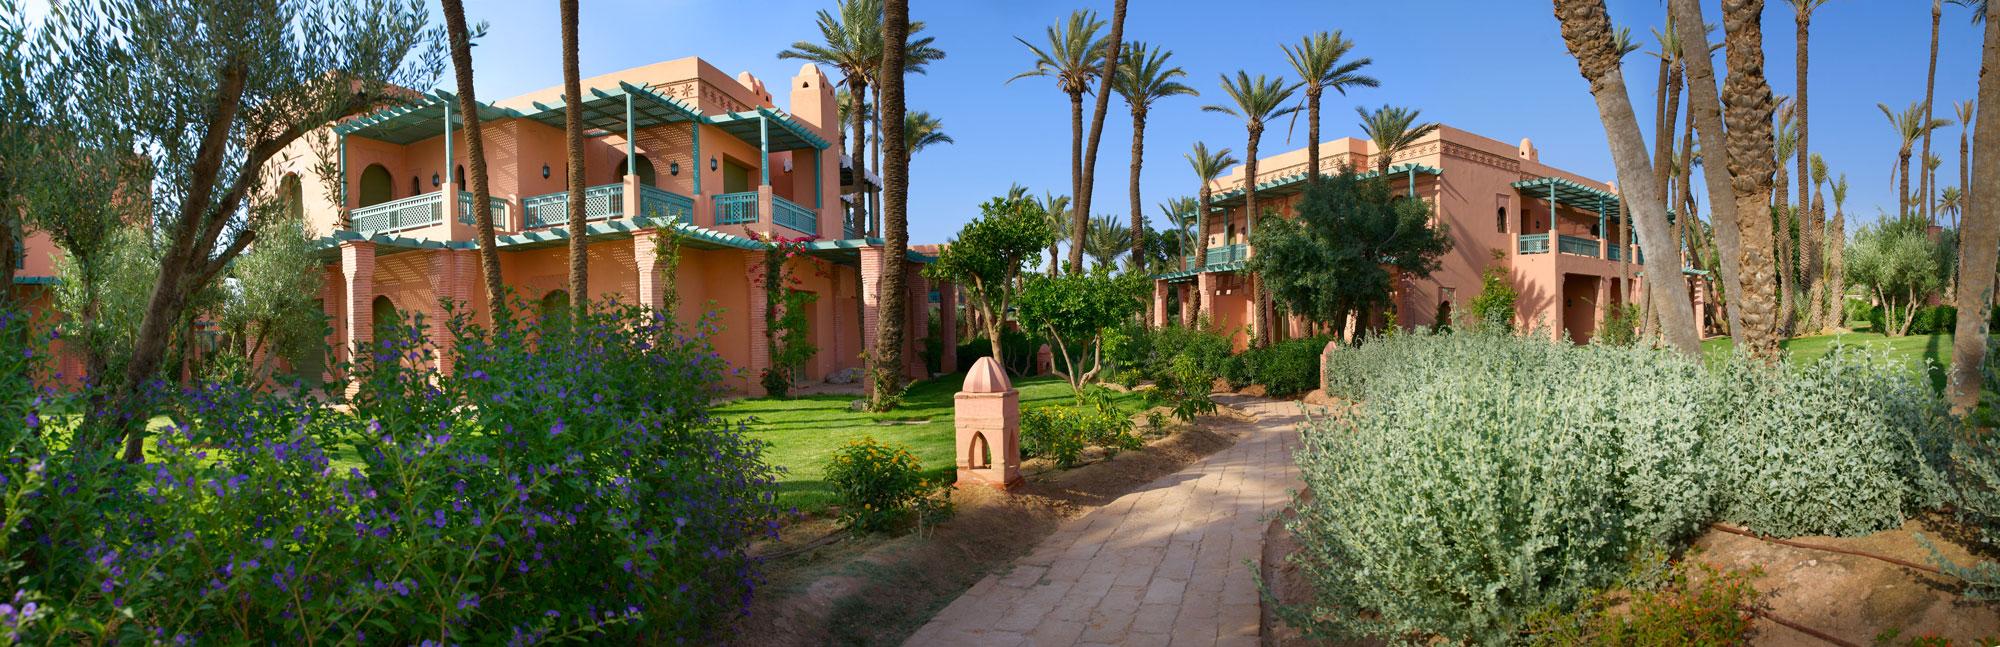 The Palmeraie Village's scenic hotel in sensational Morocco.